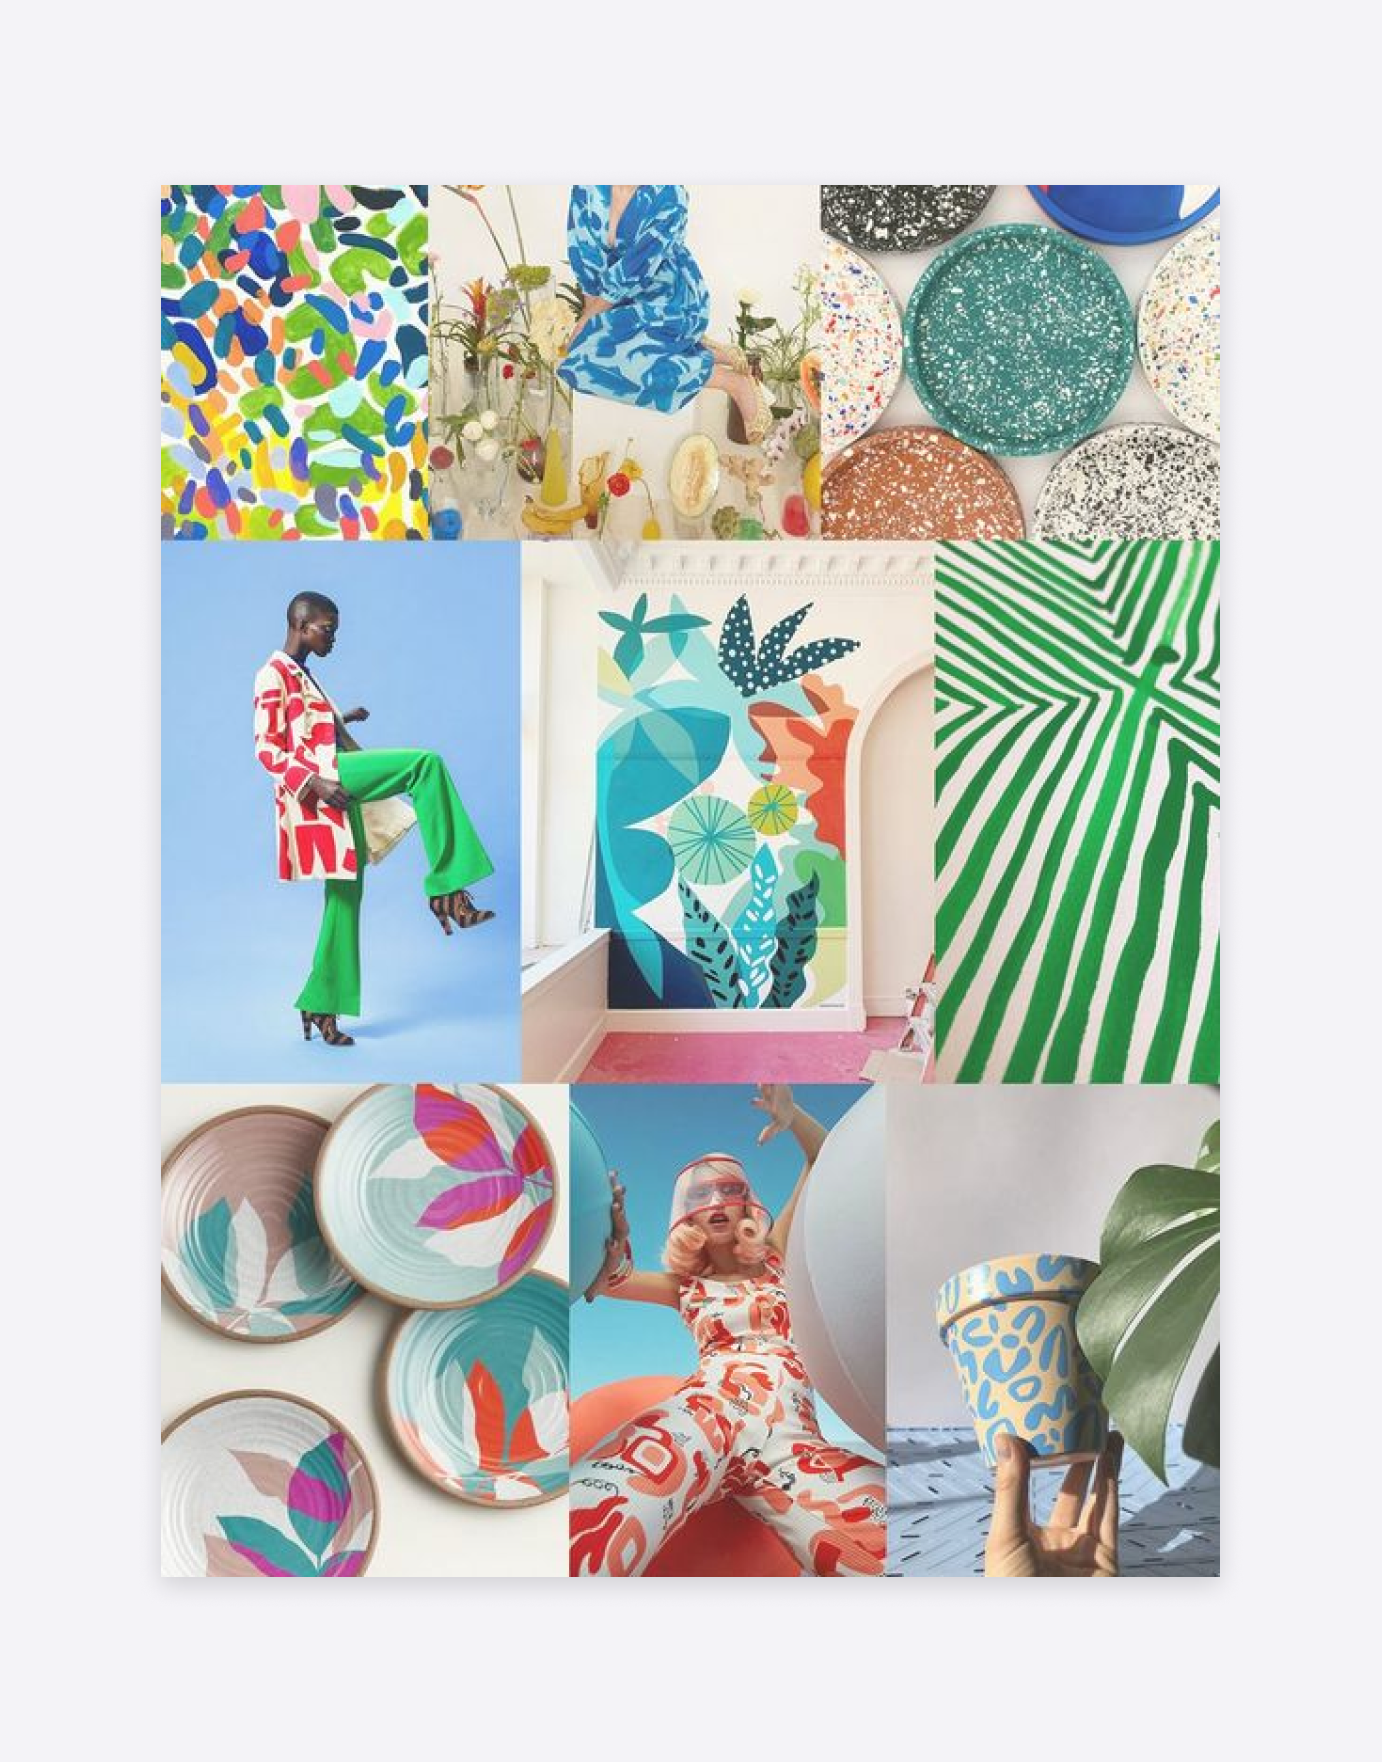 A colorful example of a fashion portfolio